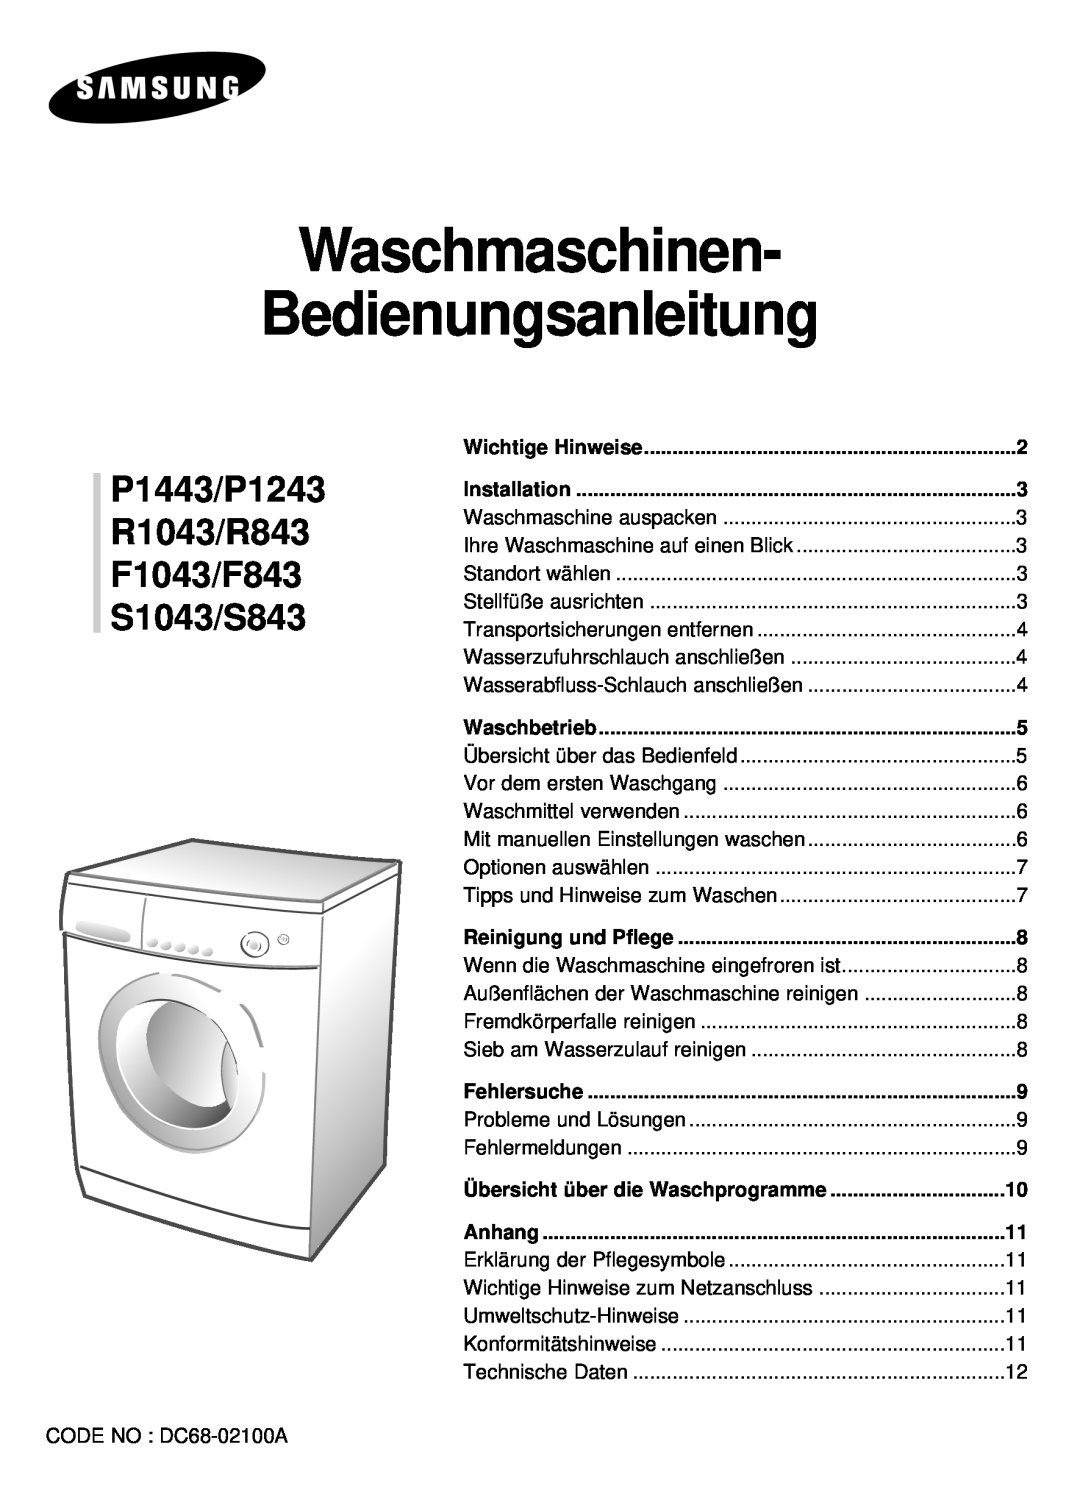 Samsung manual Waschmaschinen Bedienungsanleitung, P1443/P1243 R1043/R843 F1043/F843 S1043/S843 